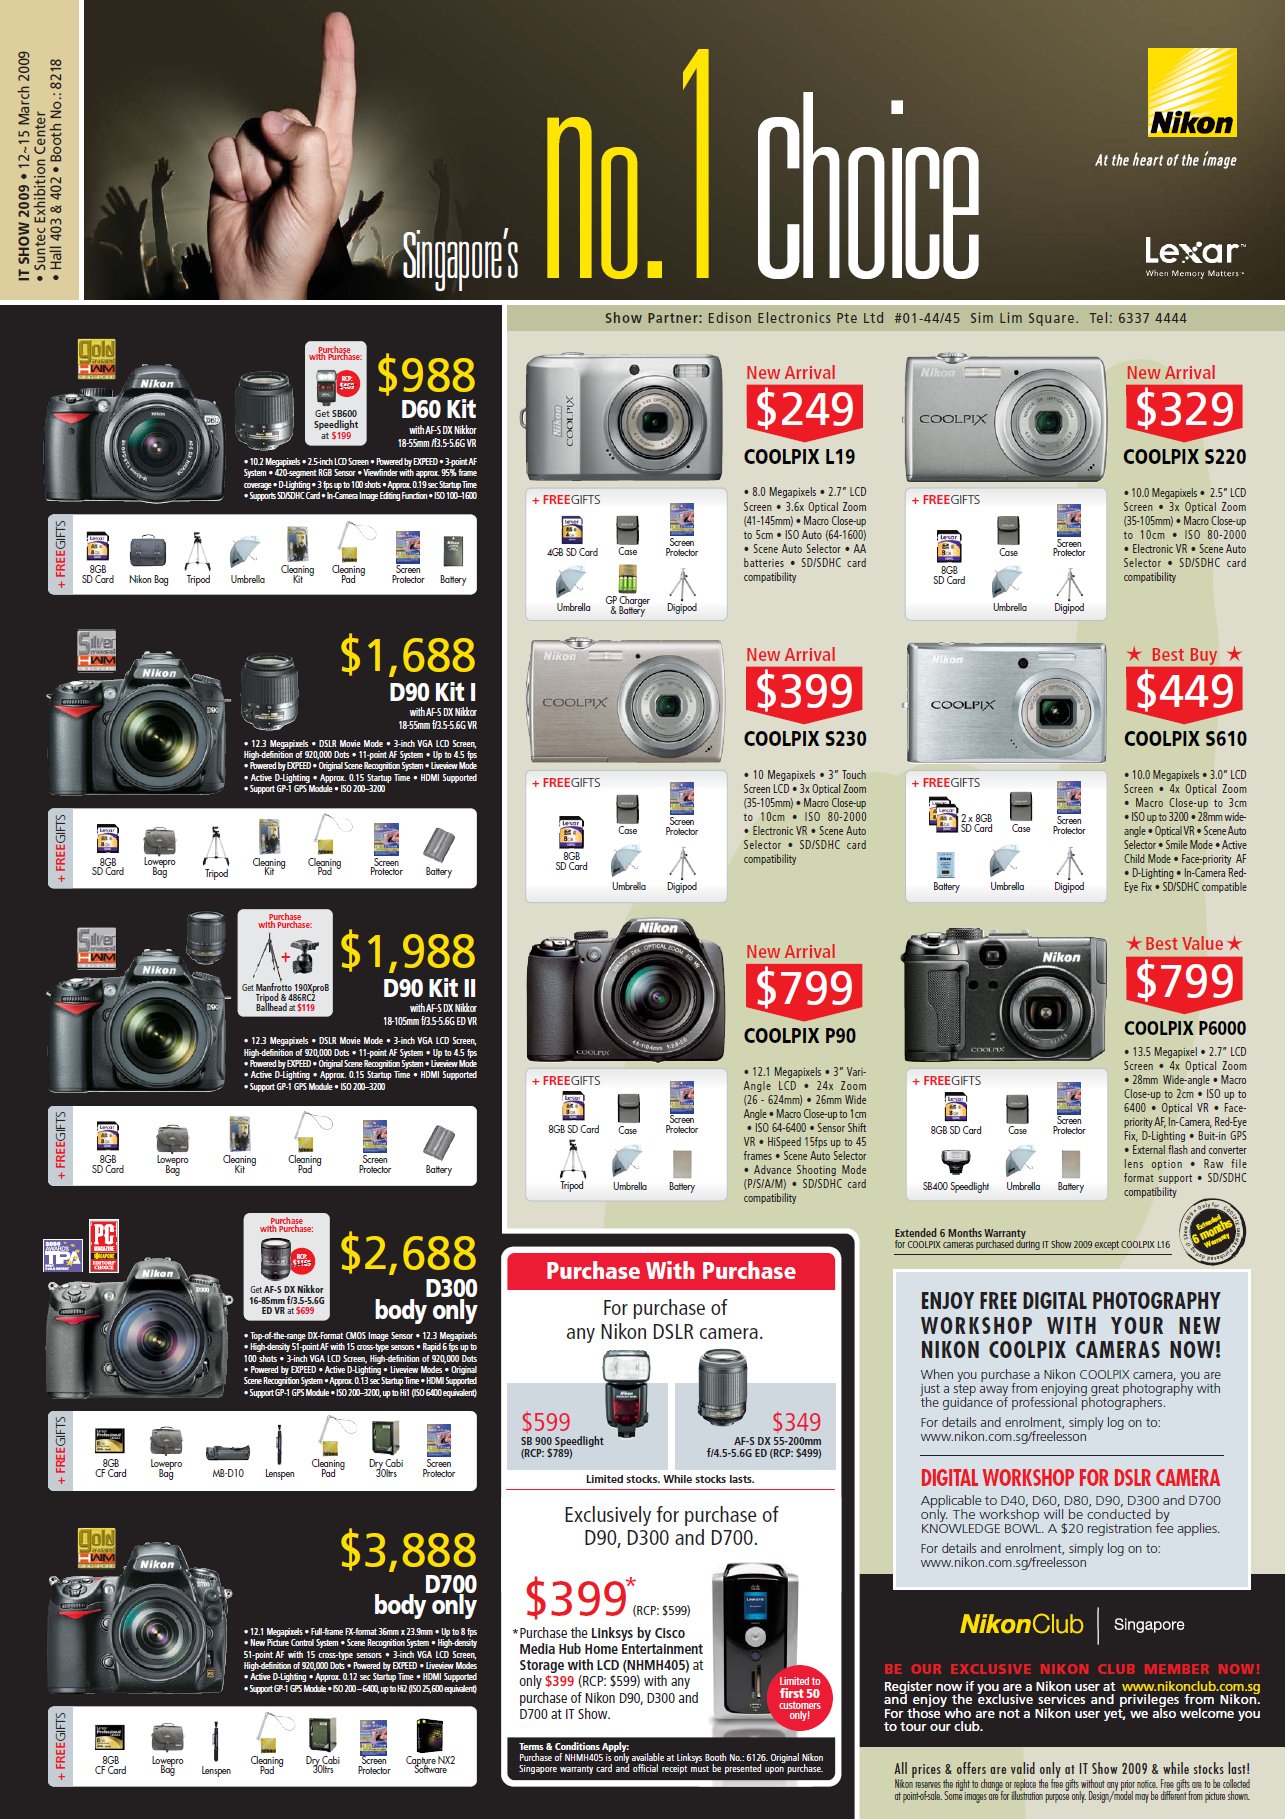 IT Show 2009 price list image brochure of Nikon DSLR